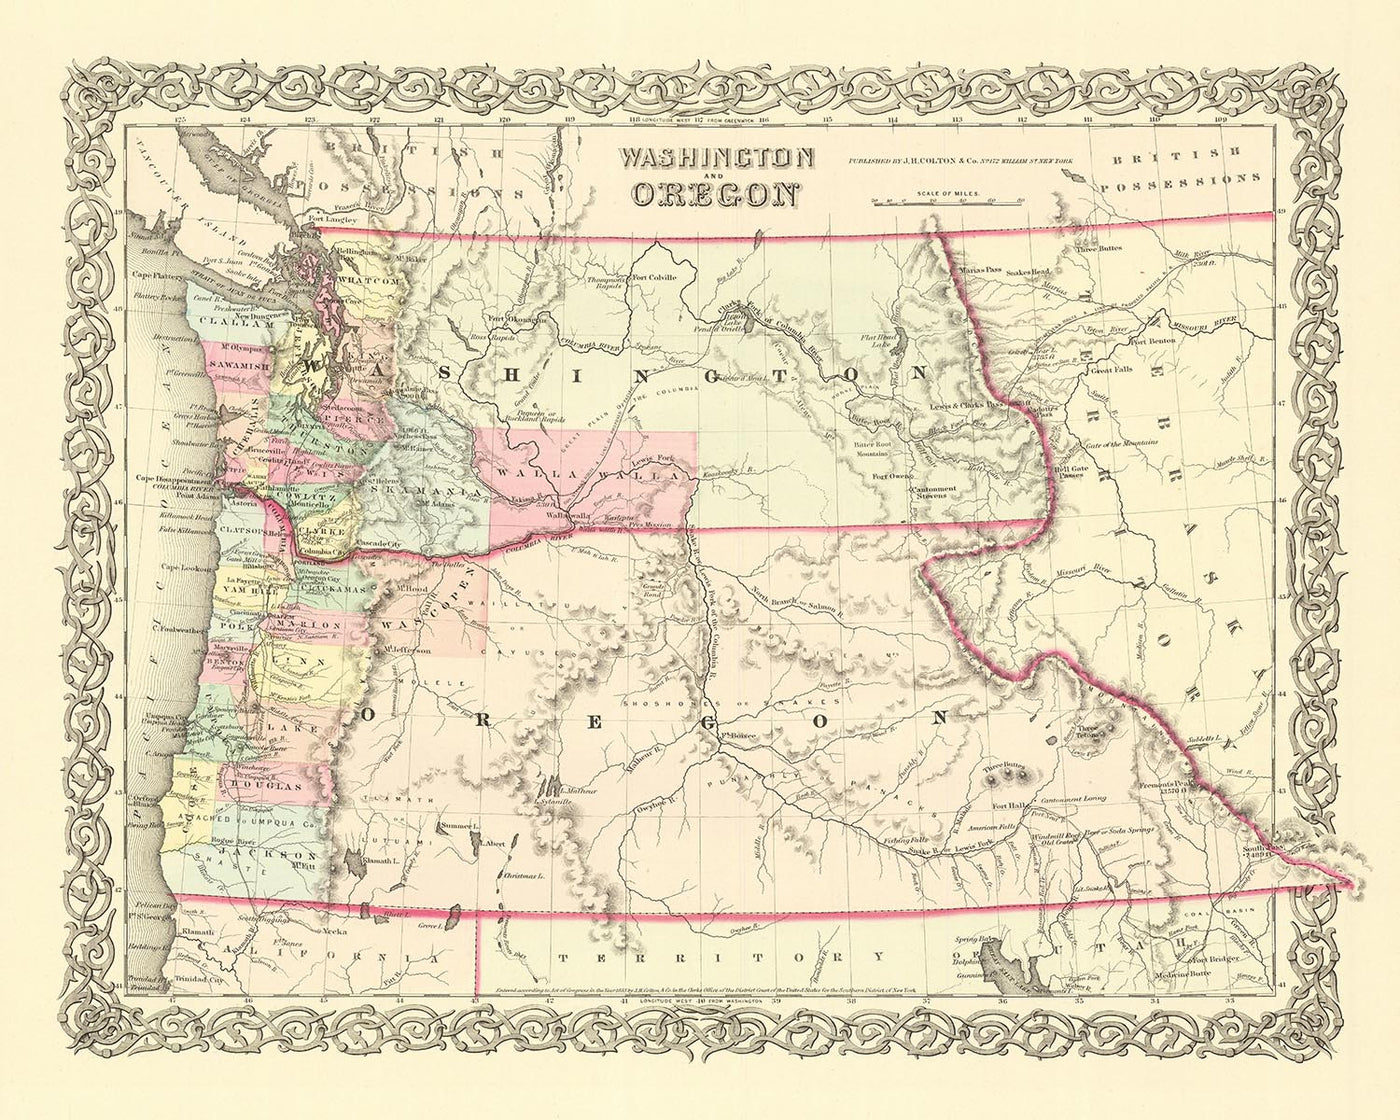 Old map of Washington & Oregon by Colton, 1859: Olympia, Vancouver, Salem, Portland, Walla Walla